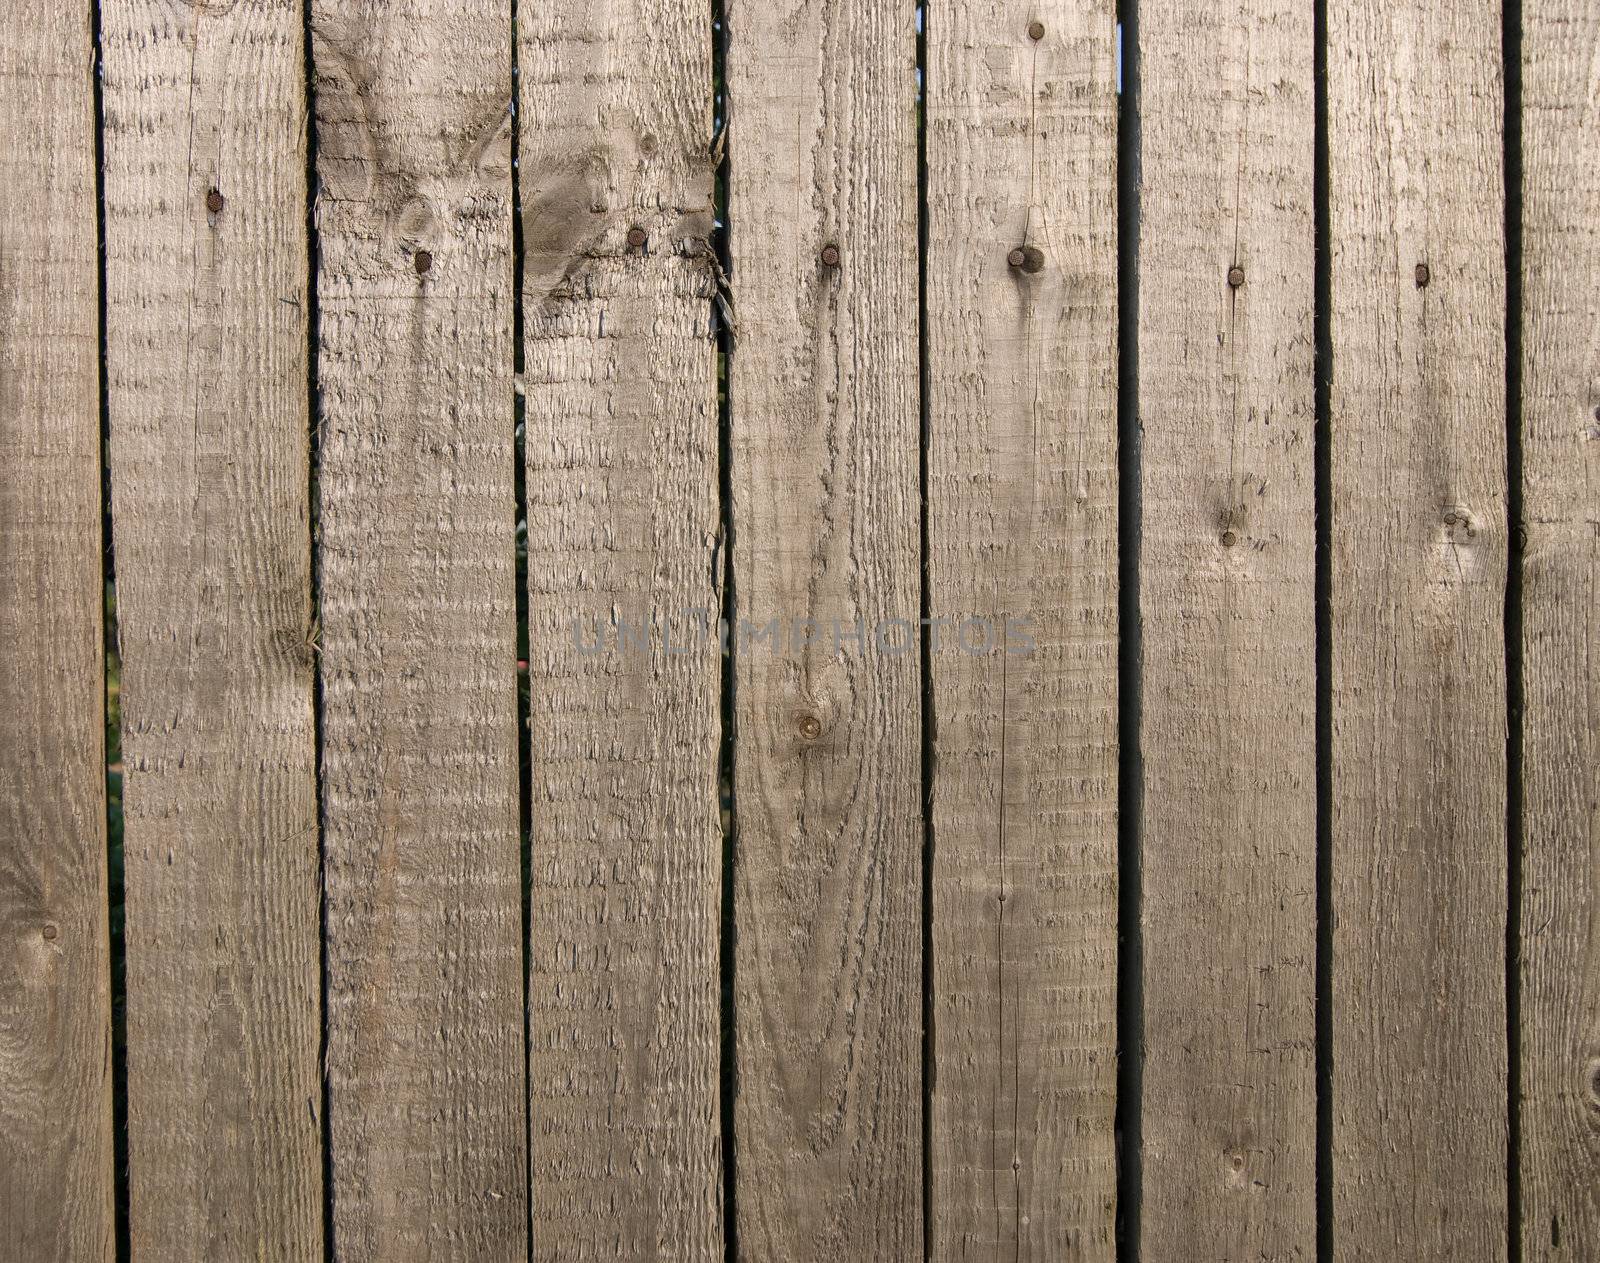 Wooden fence by maxkrasnov